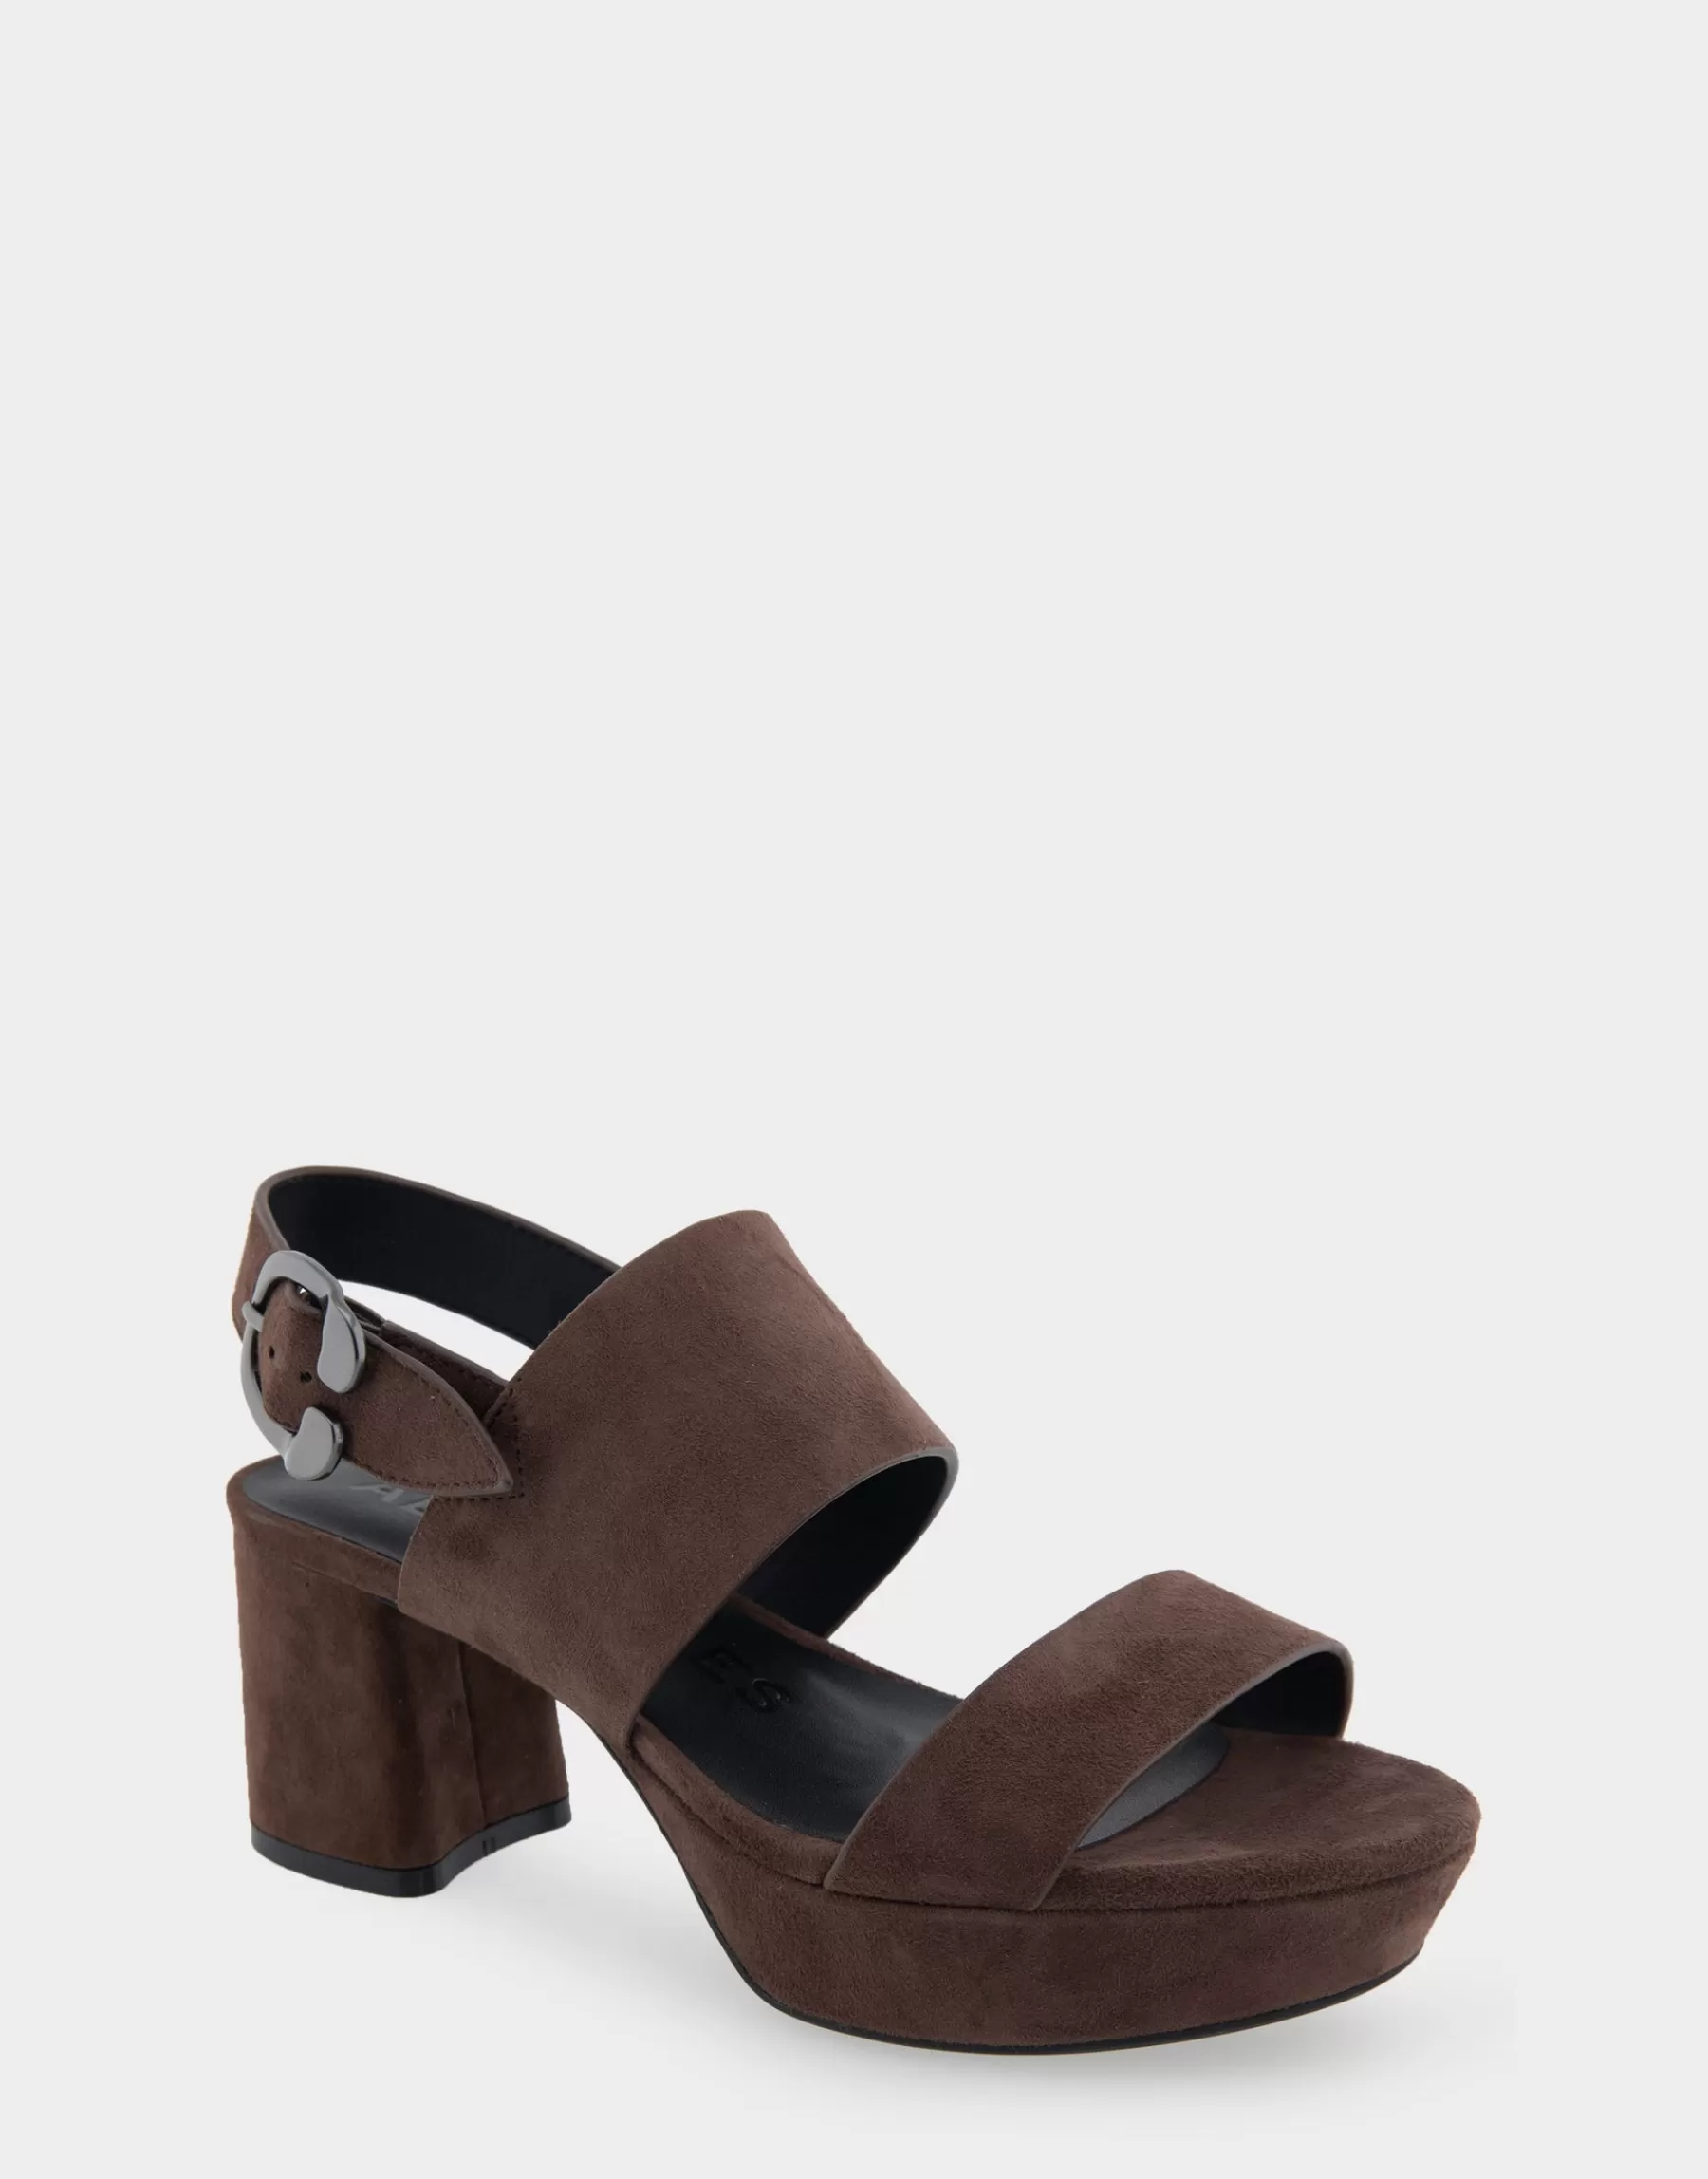 Aerosoles Comfortable Women's Platform Sandal in Brown Genuine Suede Java Suede Outlet